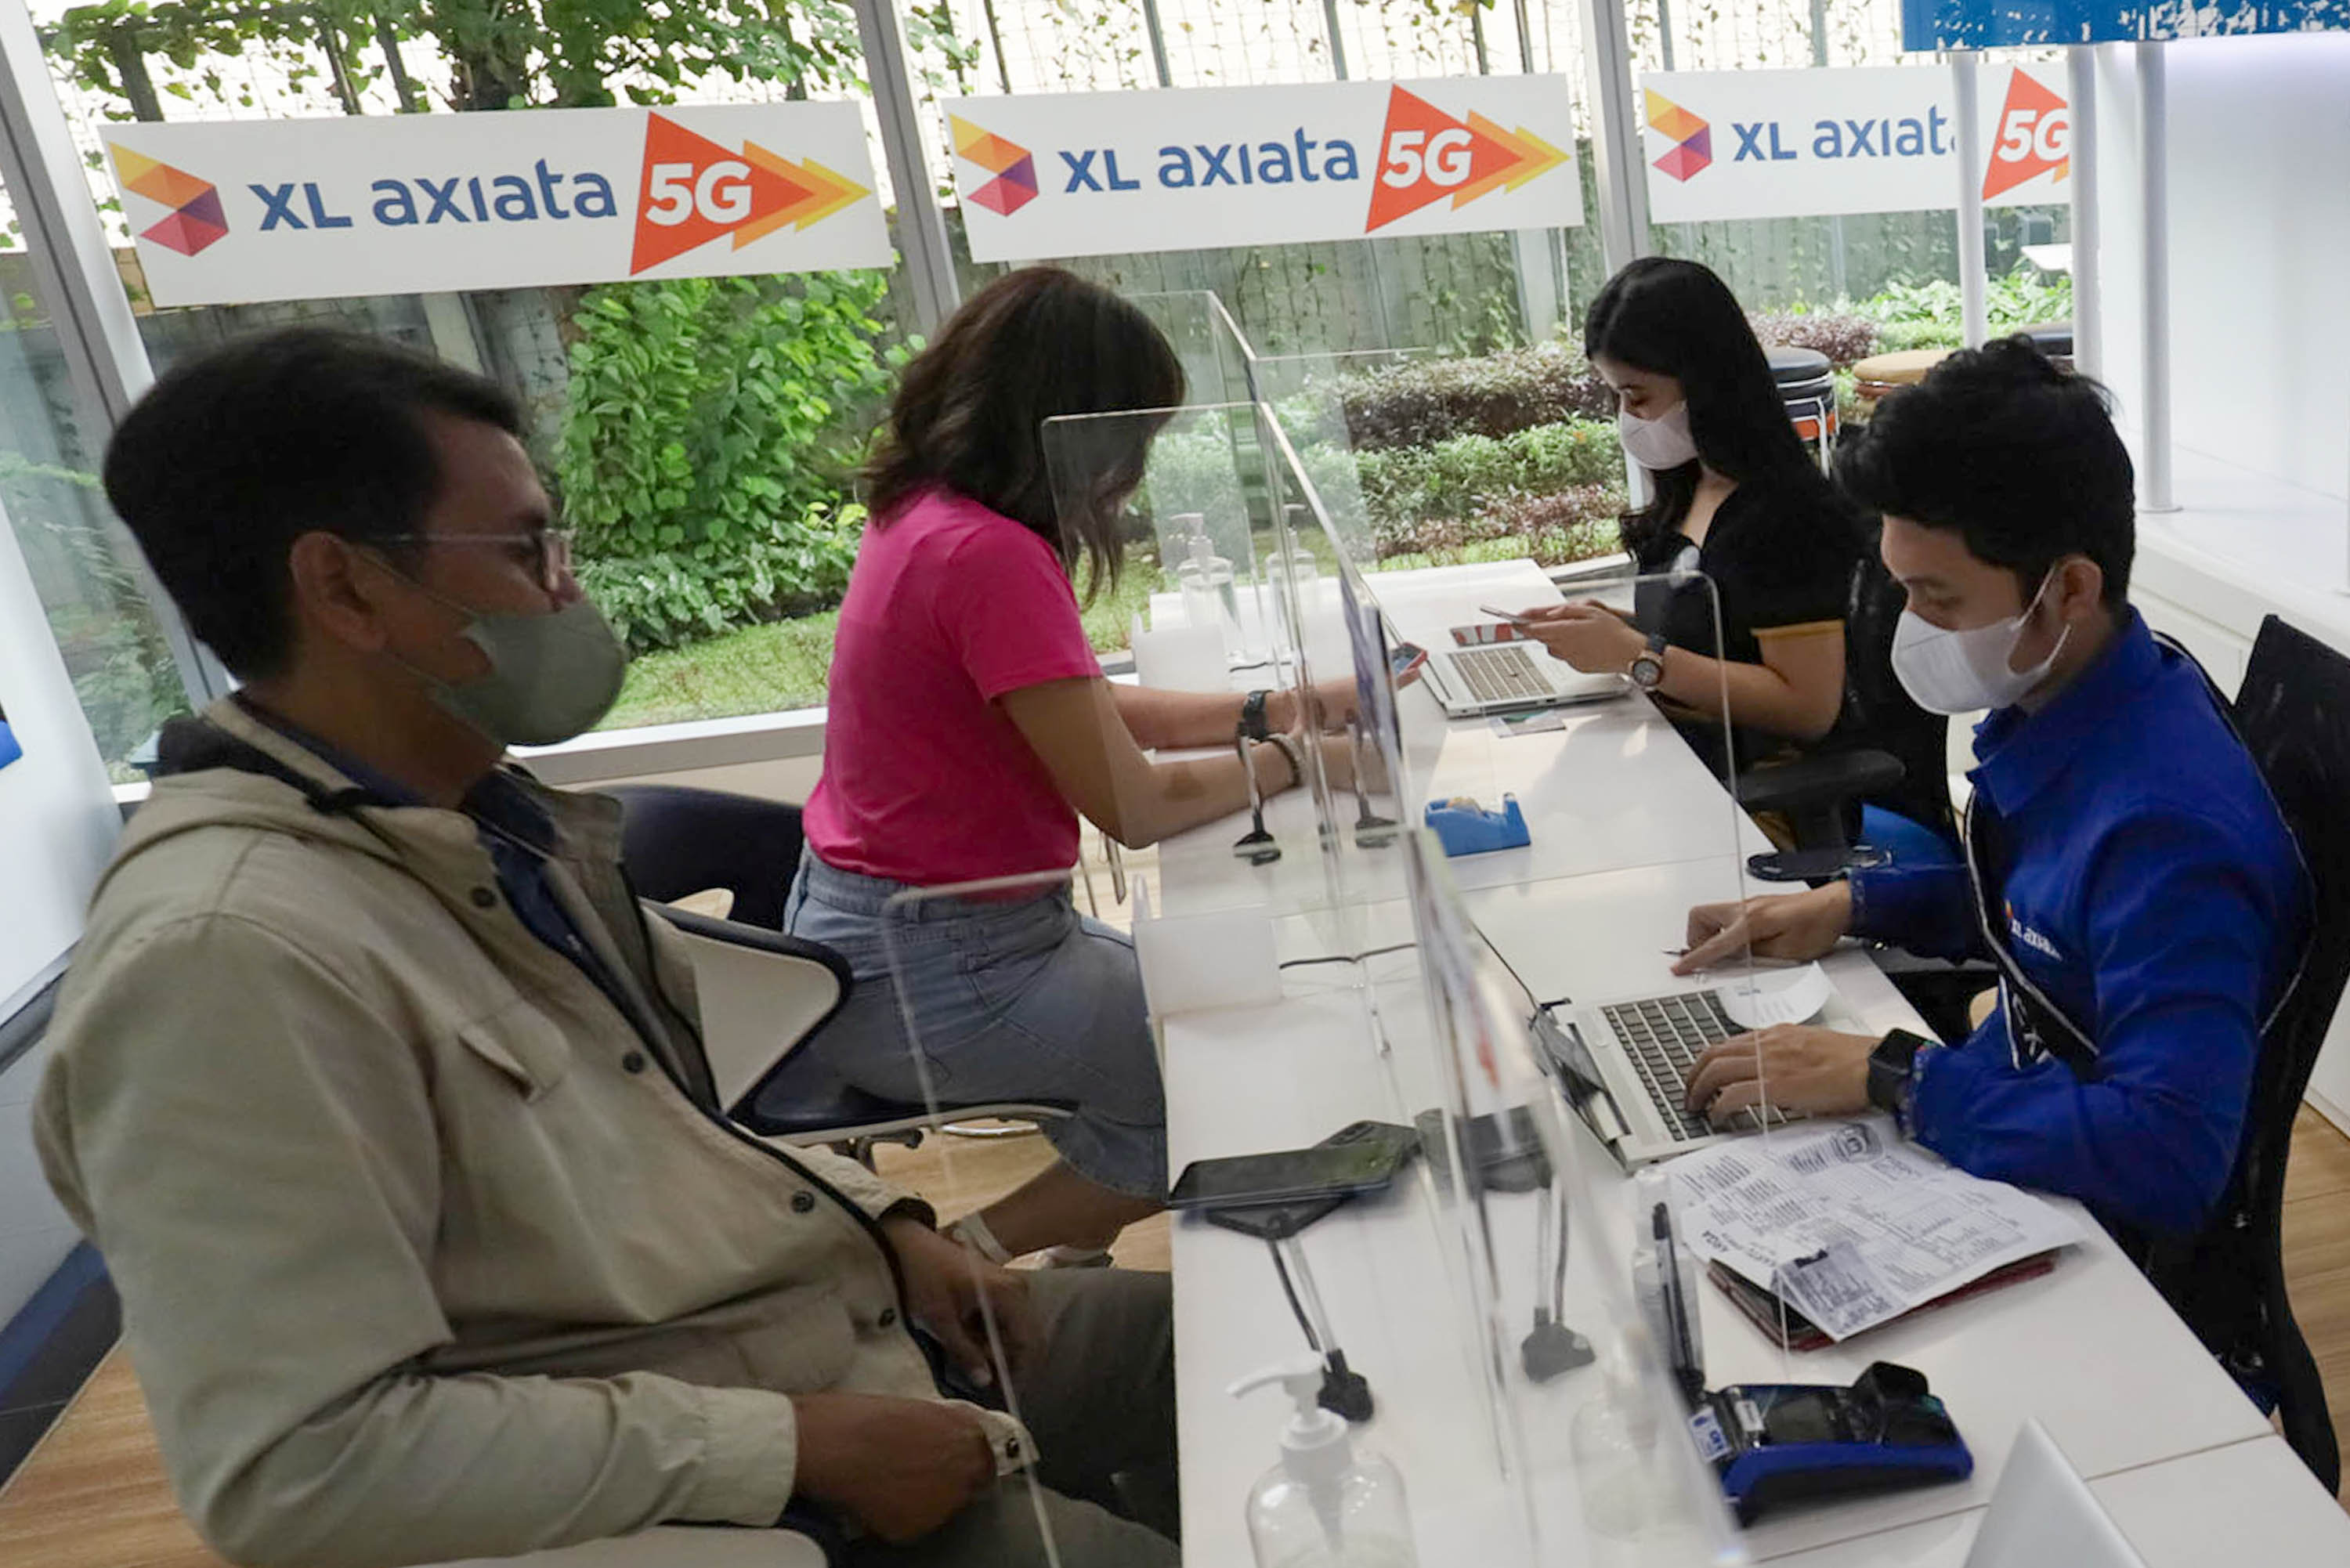 Suasana pelayanan pelanggan di counter XL Xplor Axiata Tower, Jakarta. Foto: Ismail Pohan/TrenAsia